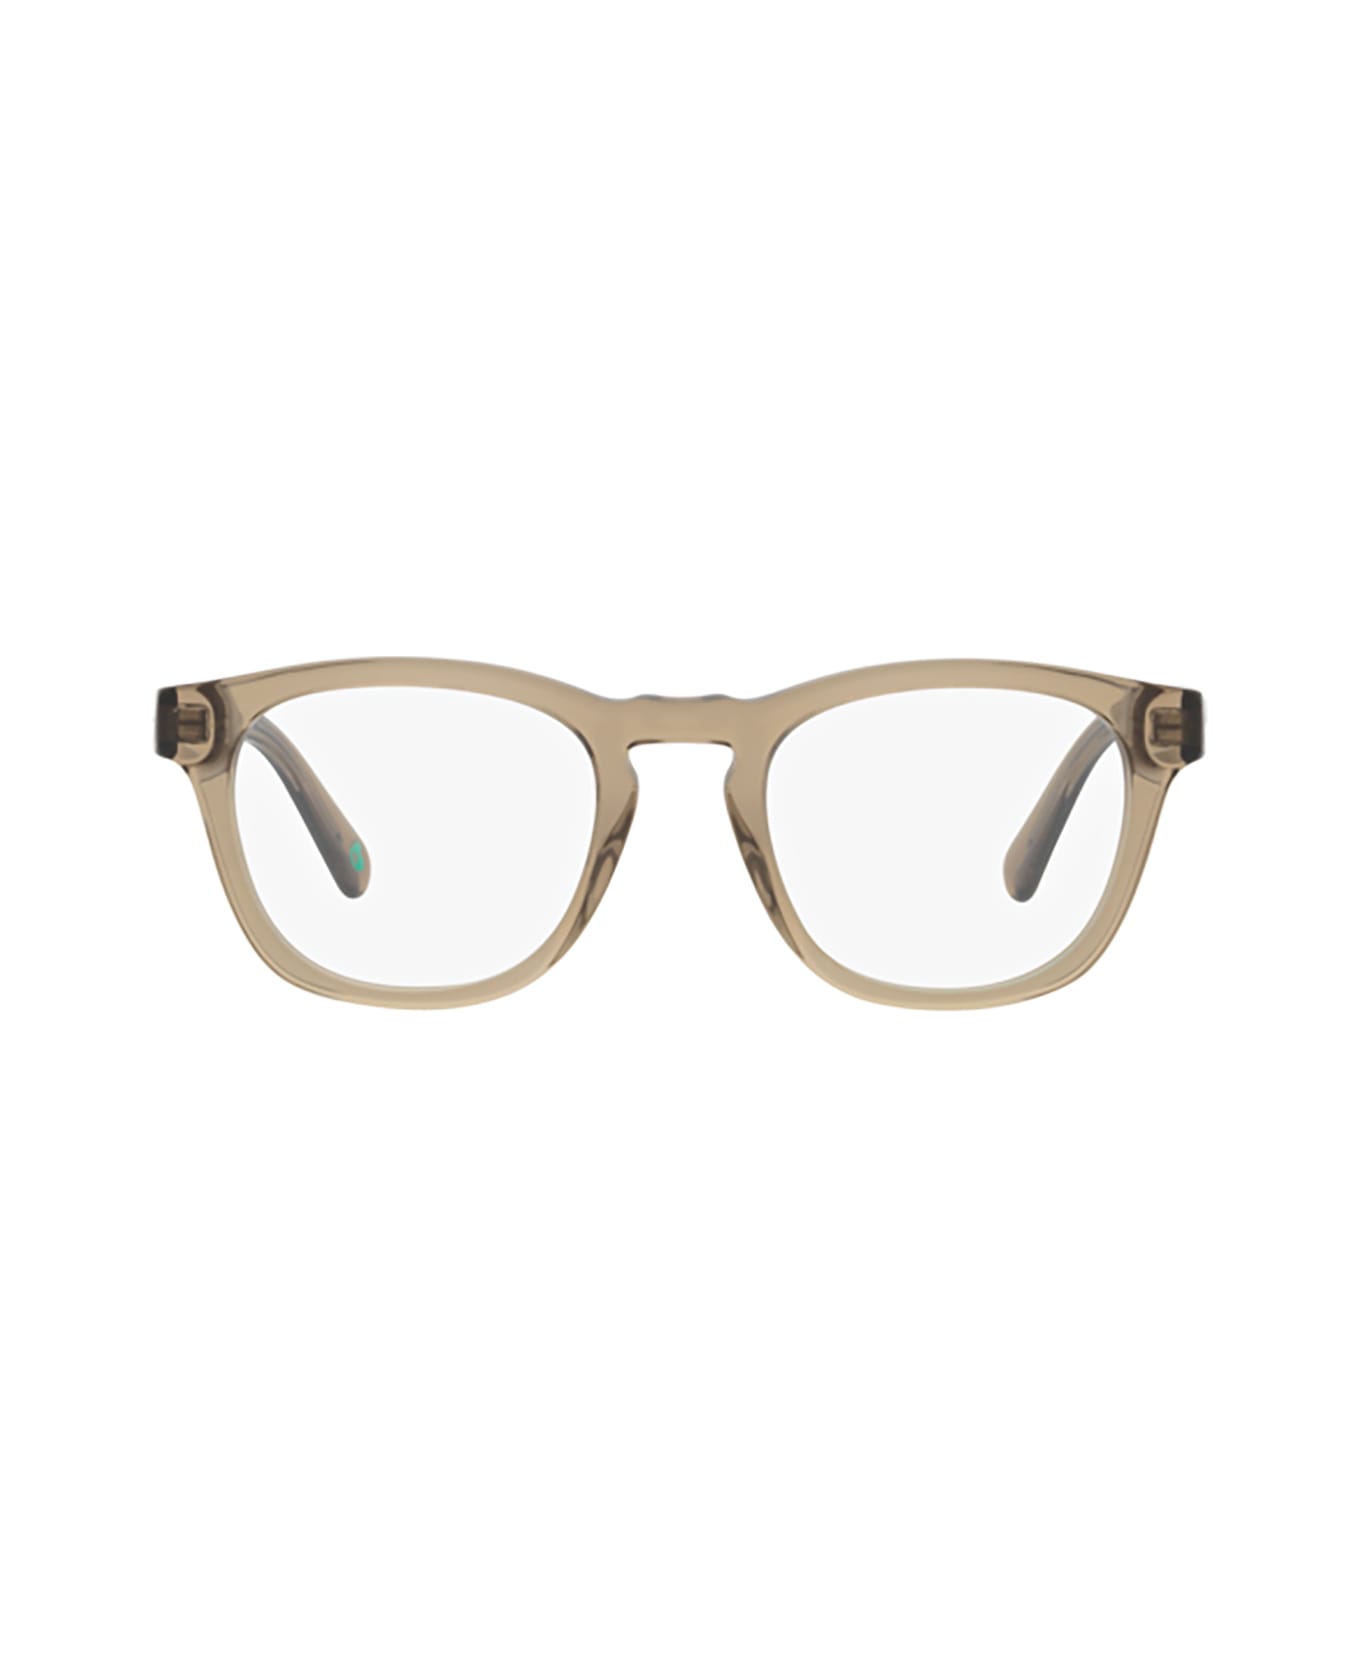 Polo Ralph Lauren Ph2258 Shiny Transparent Light Brown Glasses - Shiny Transparent Light Brown アイウェア